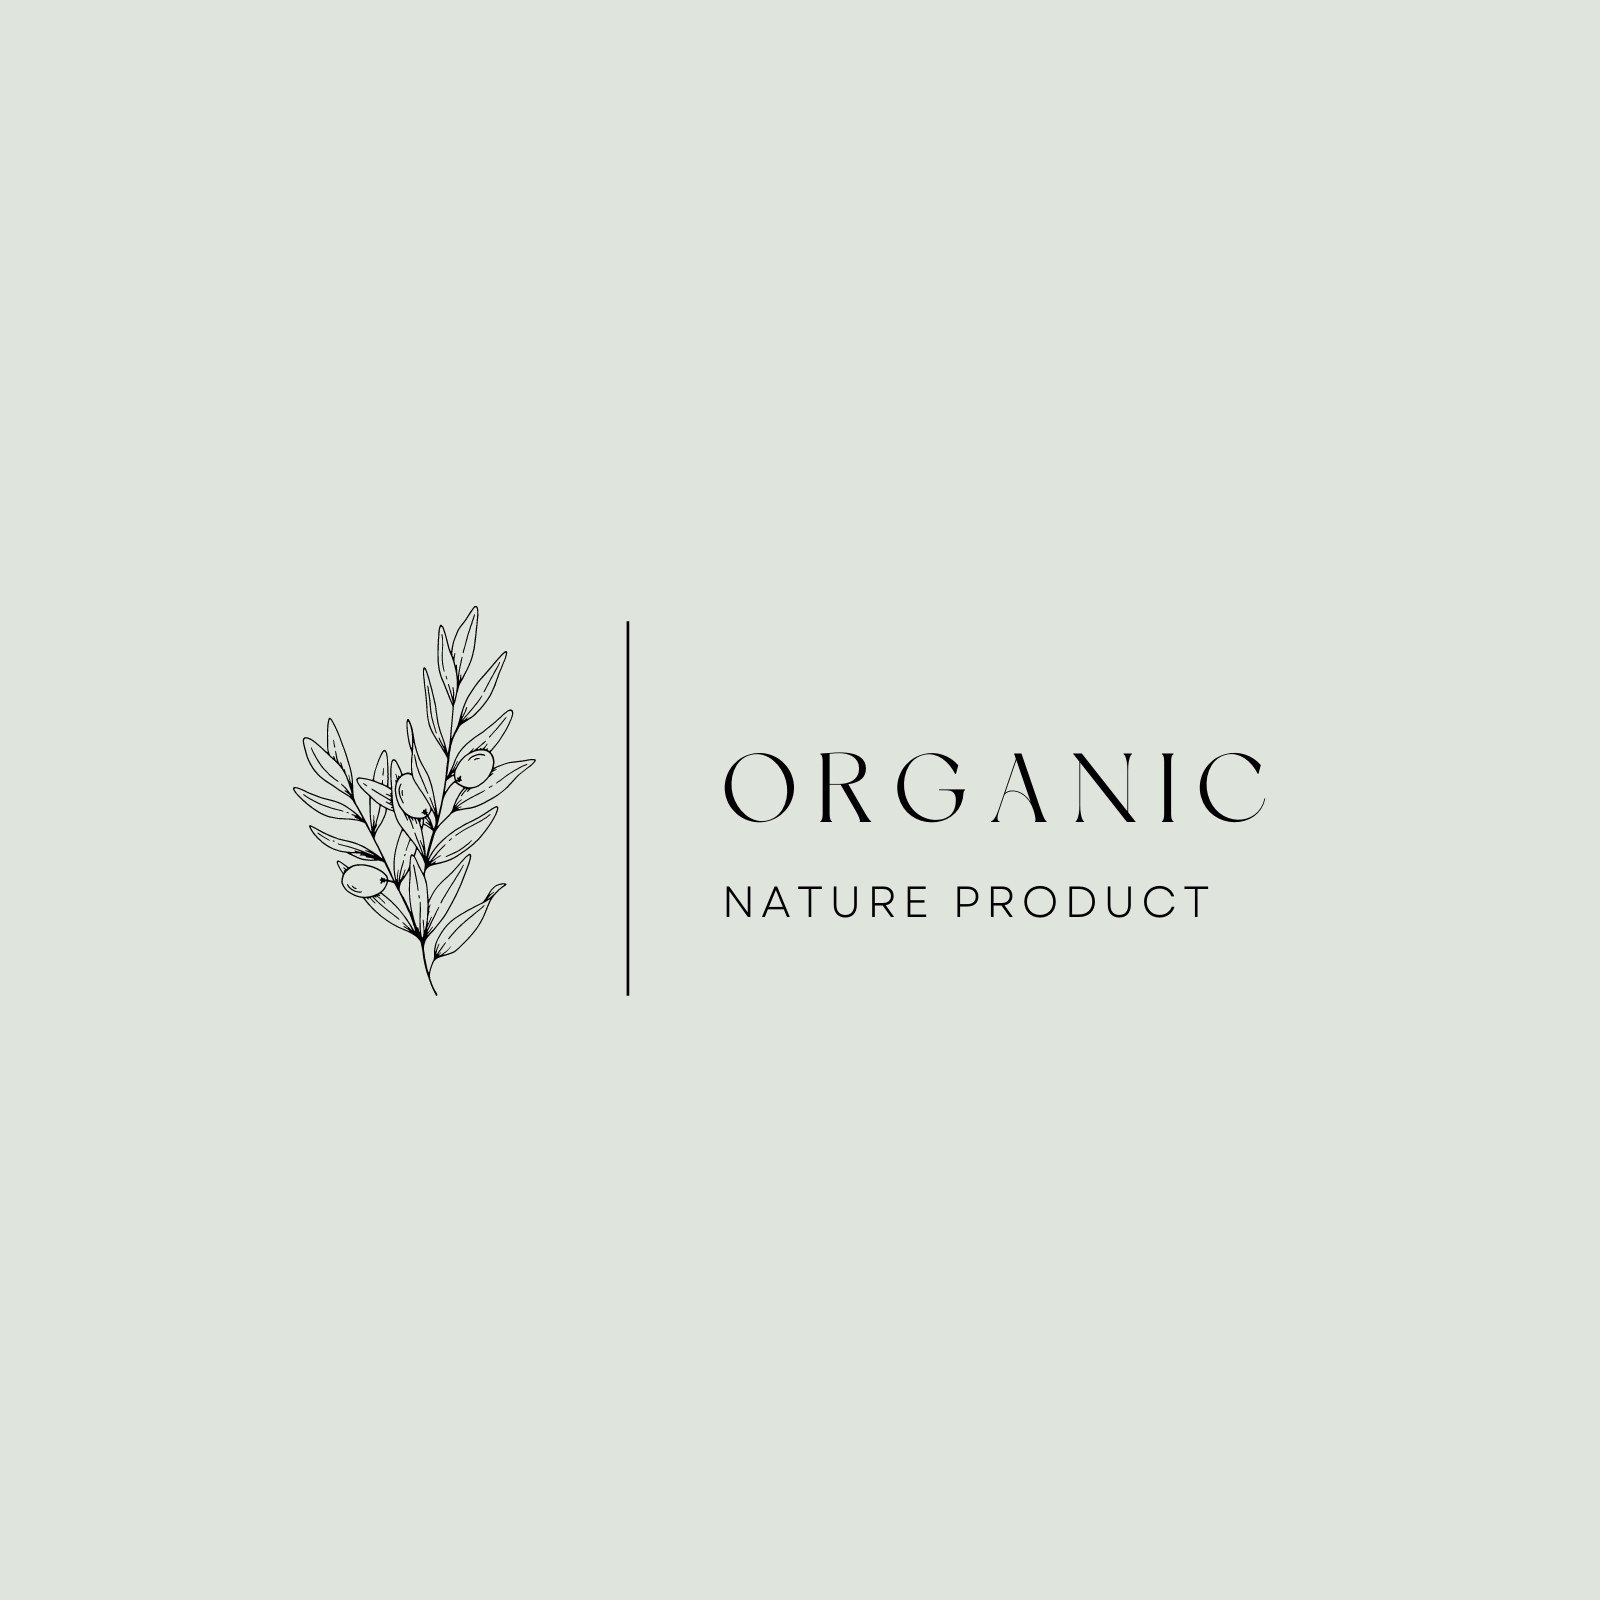 Organic Cotton Icon, 100 Natural Bio and Eco Product Vector Logo